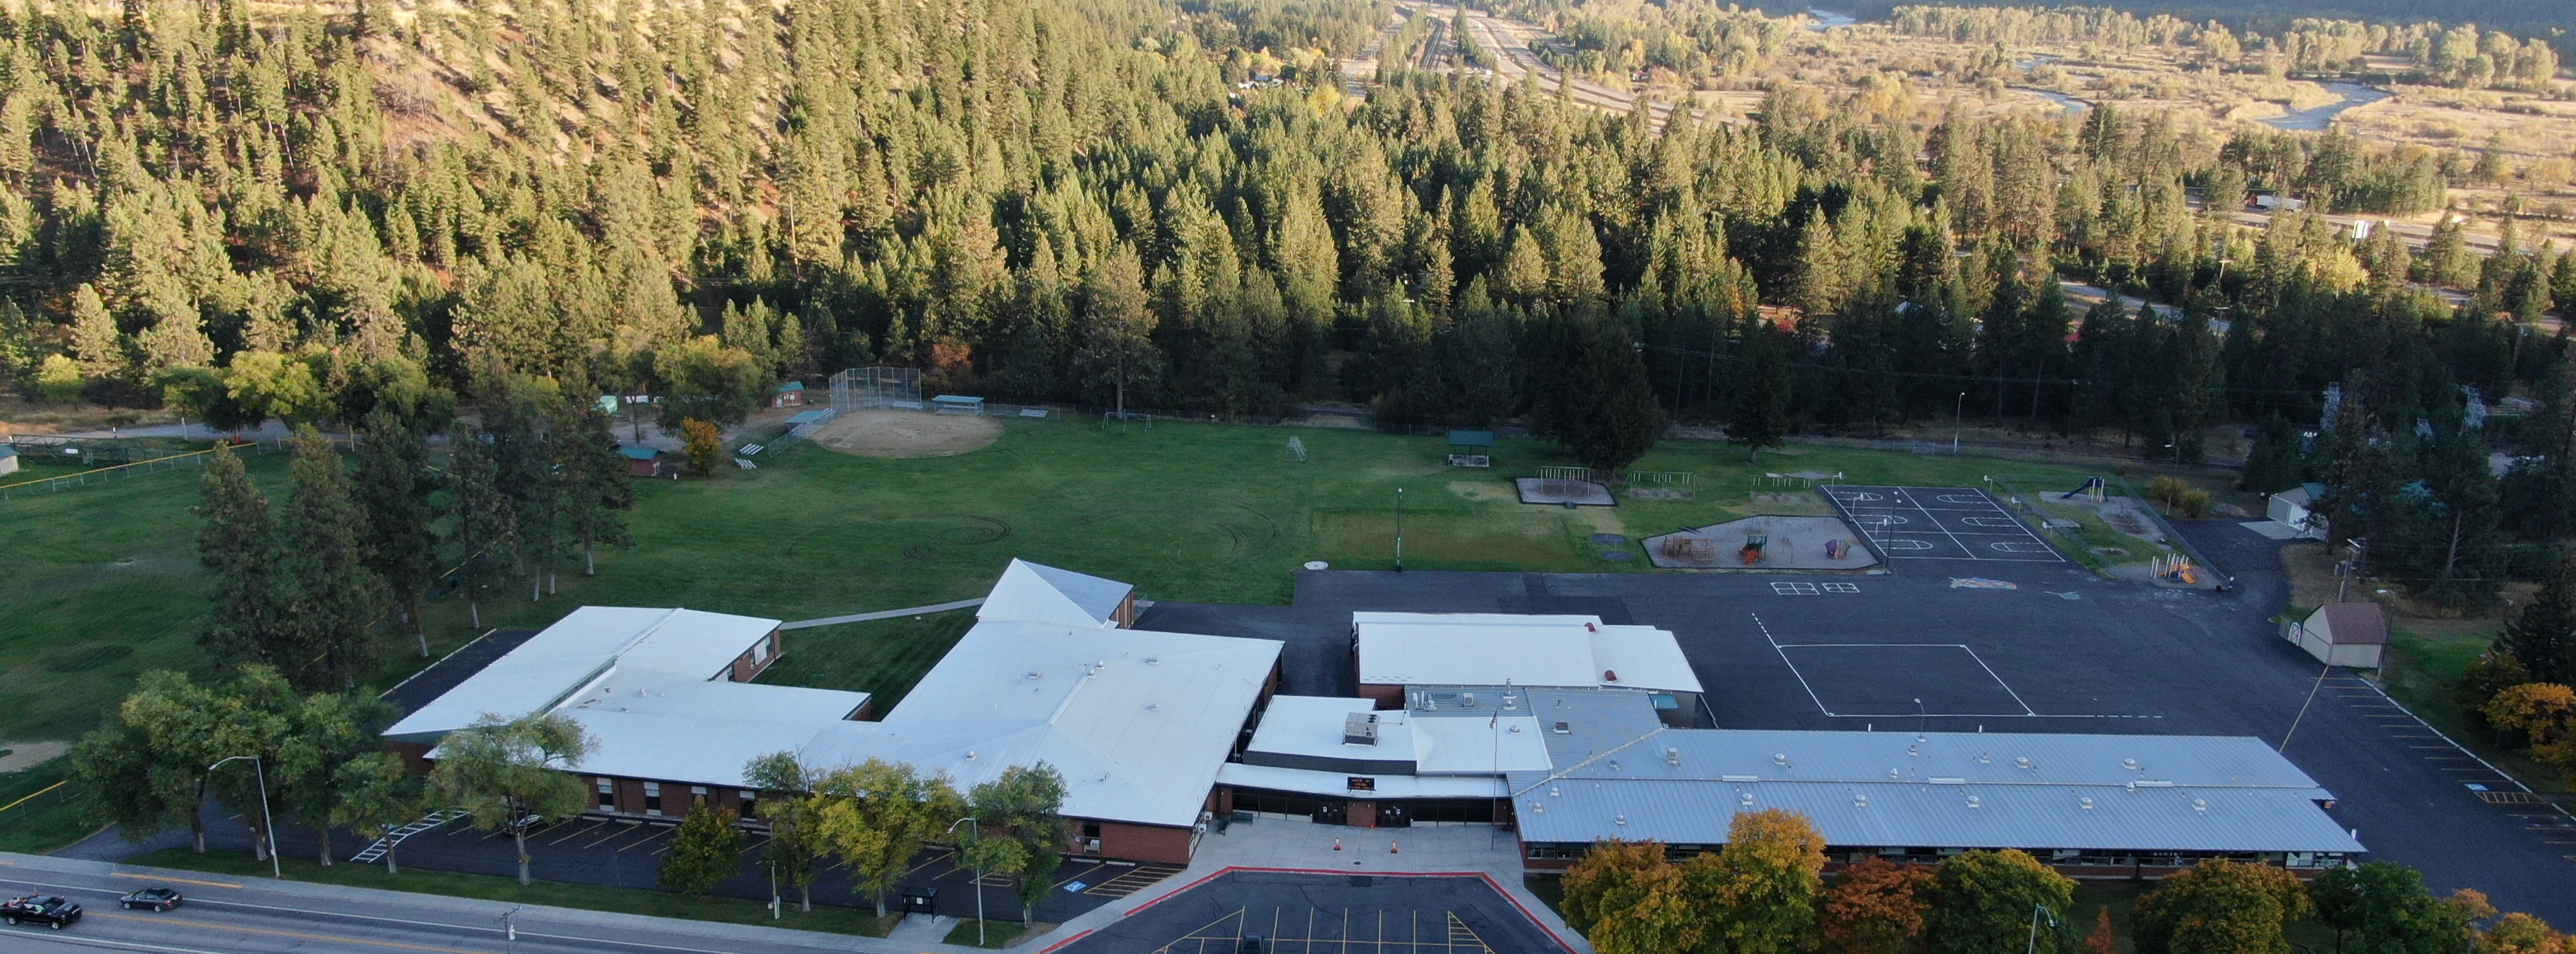 Aerial view of Bonner school building